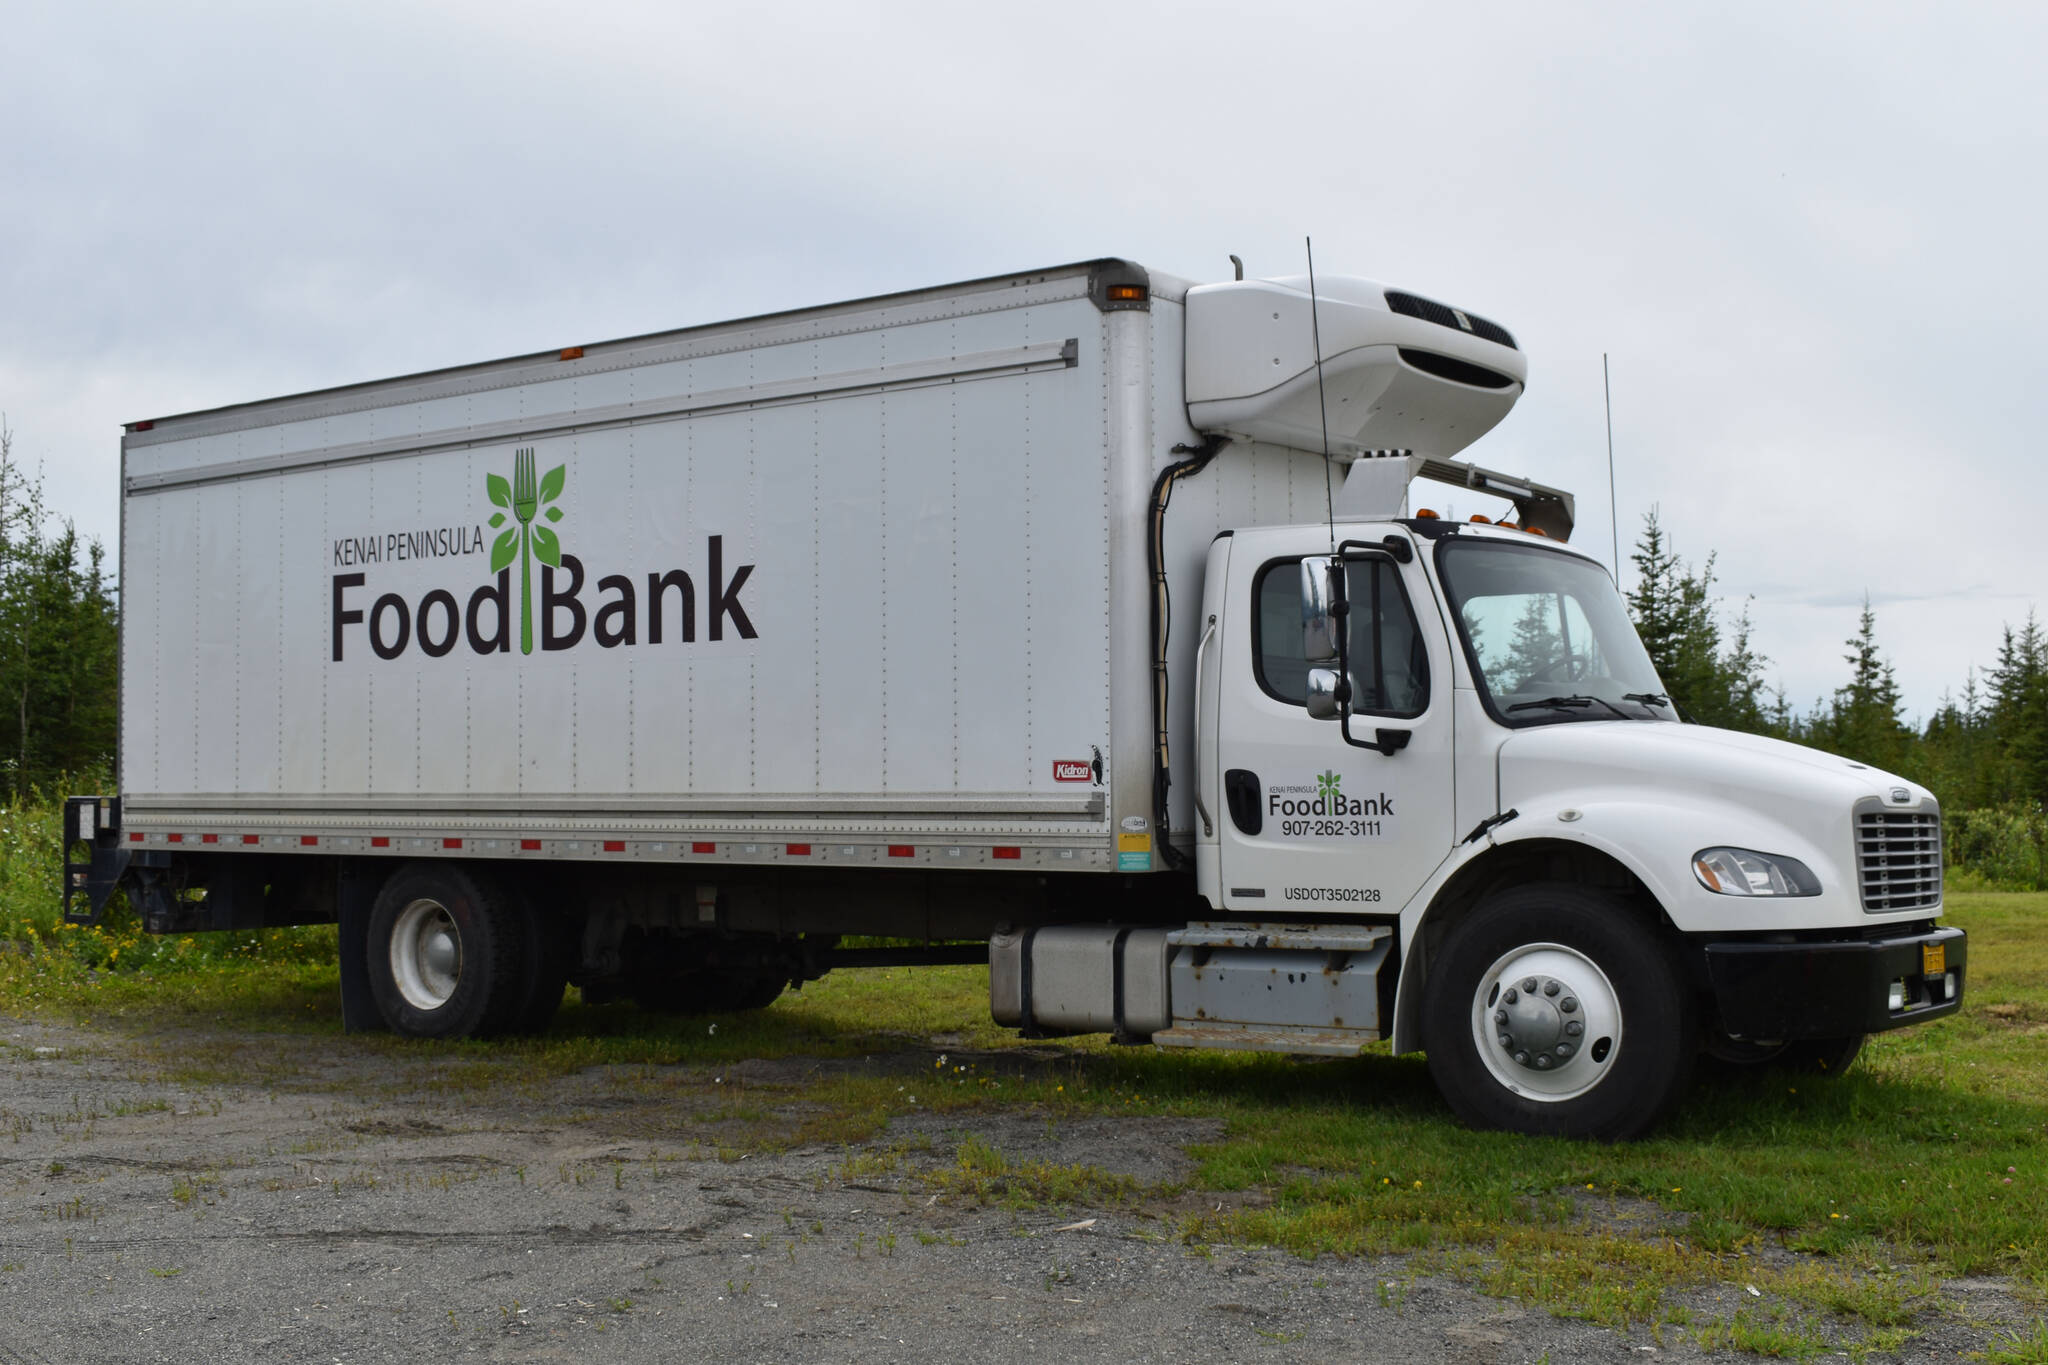 A Kenai Peninsula Food Bank truck in the food bank parking lot on Aug. 4, 2022, in Soldotna, Alaska (Jake Dye/Peninsula Clarion)